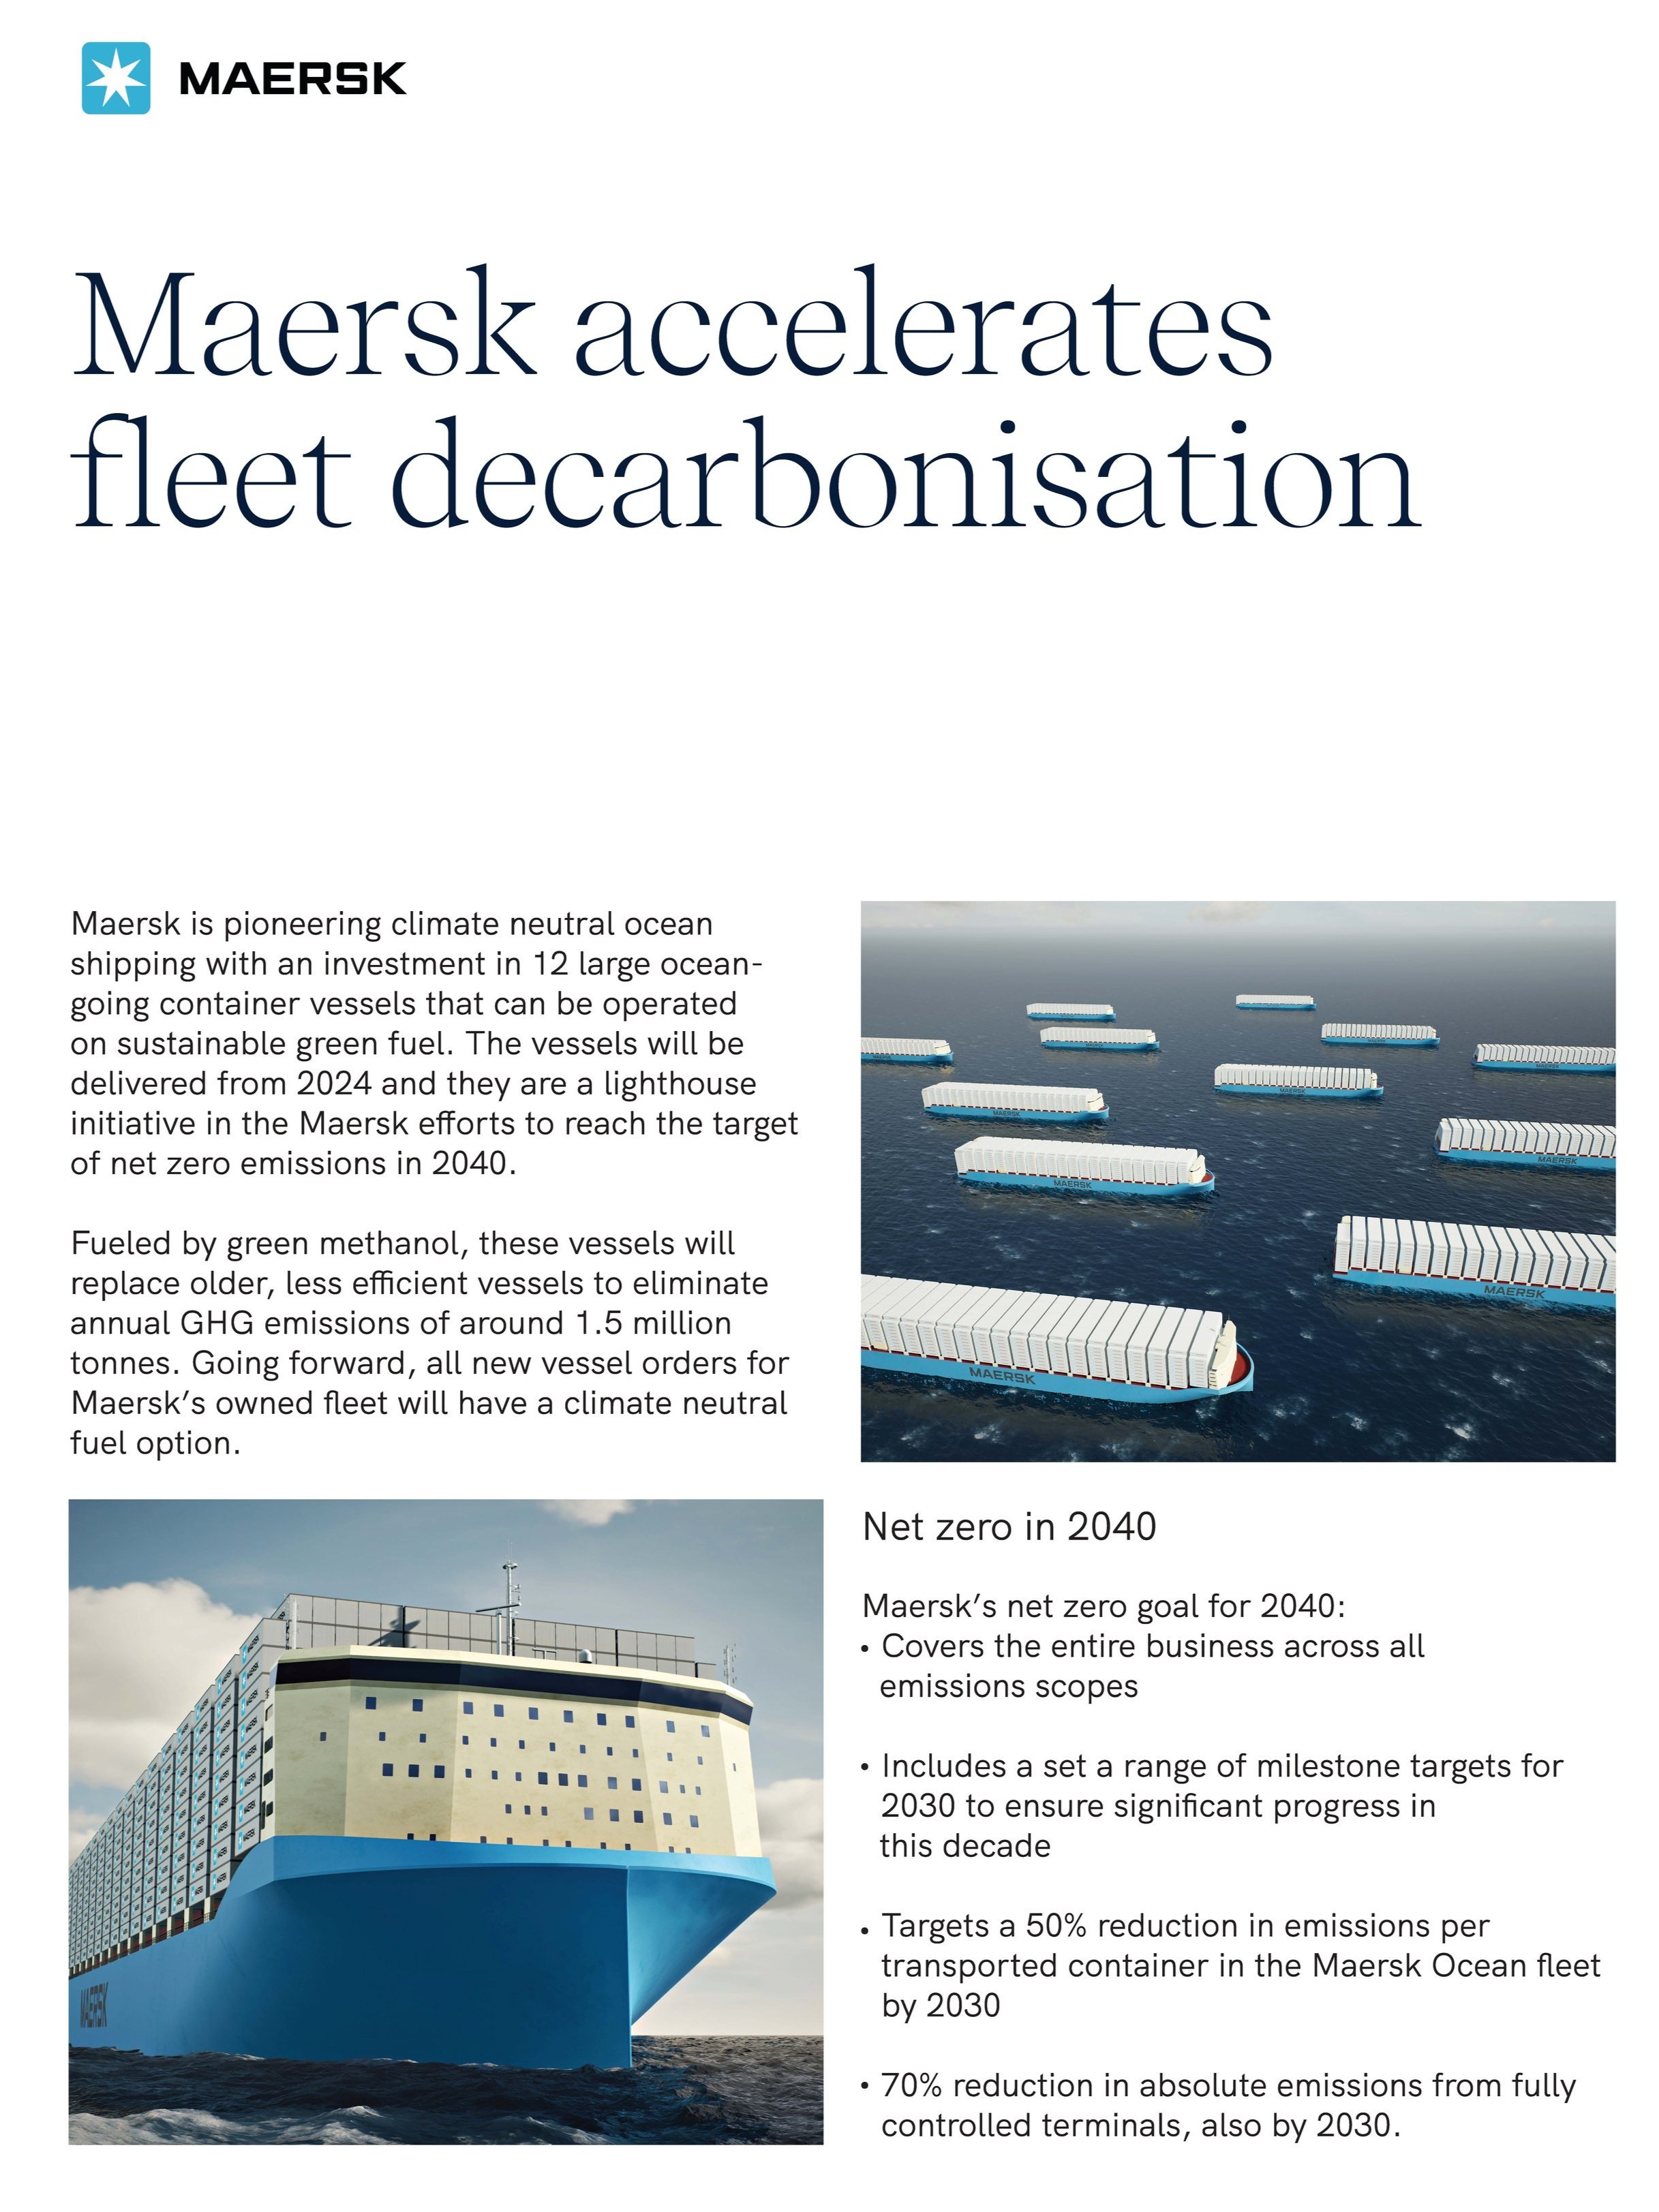 Maersk accelerates fleet decarbonisation